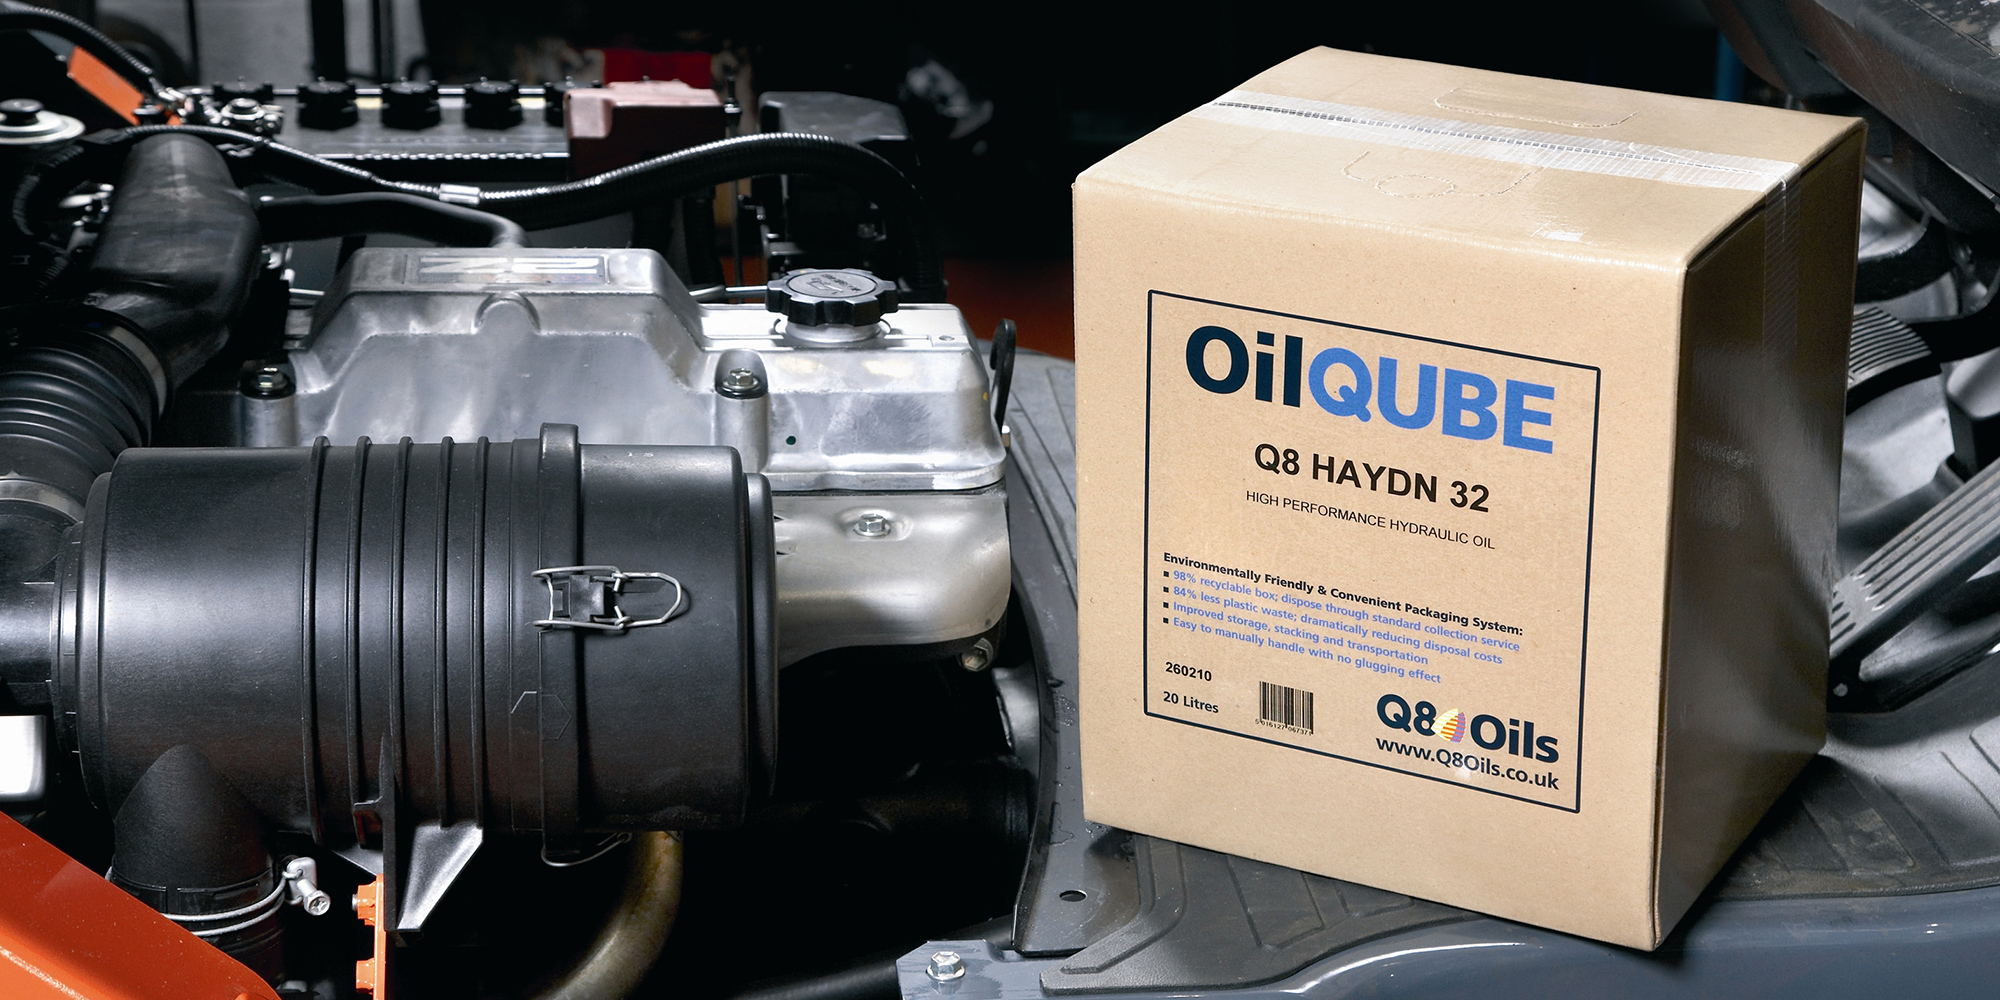 Q8Oil Packaging